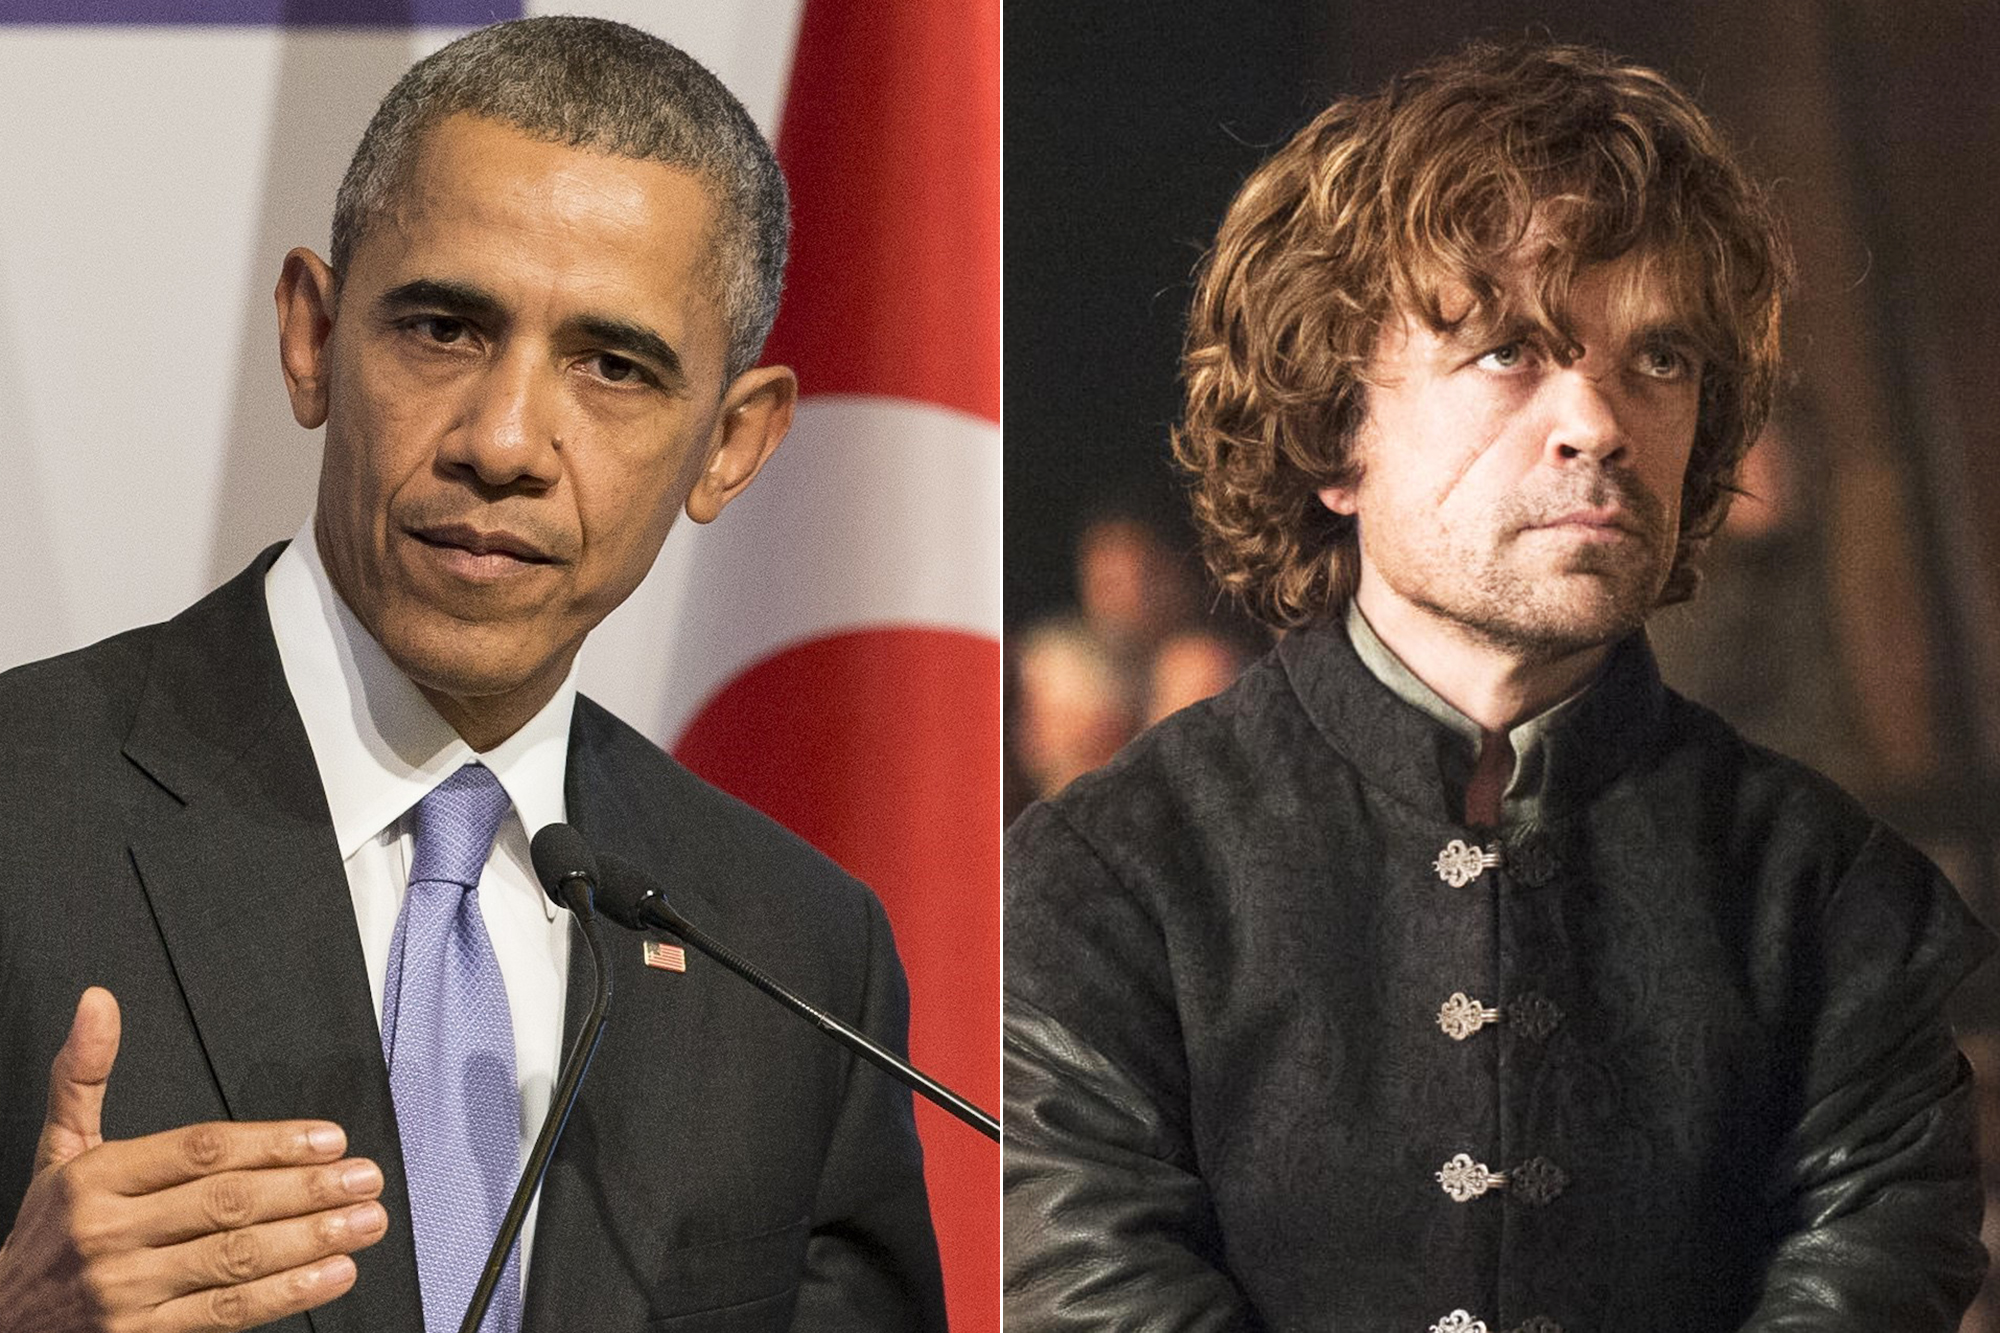 From left: Barack Obama and Tyrion Lannister.